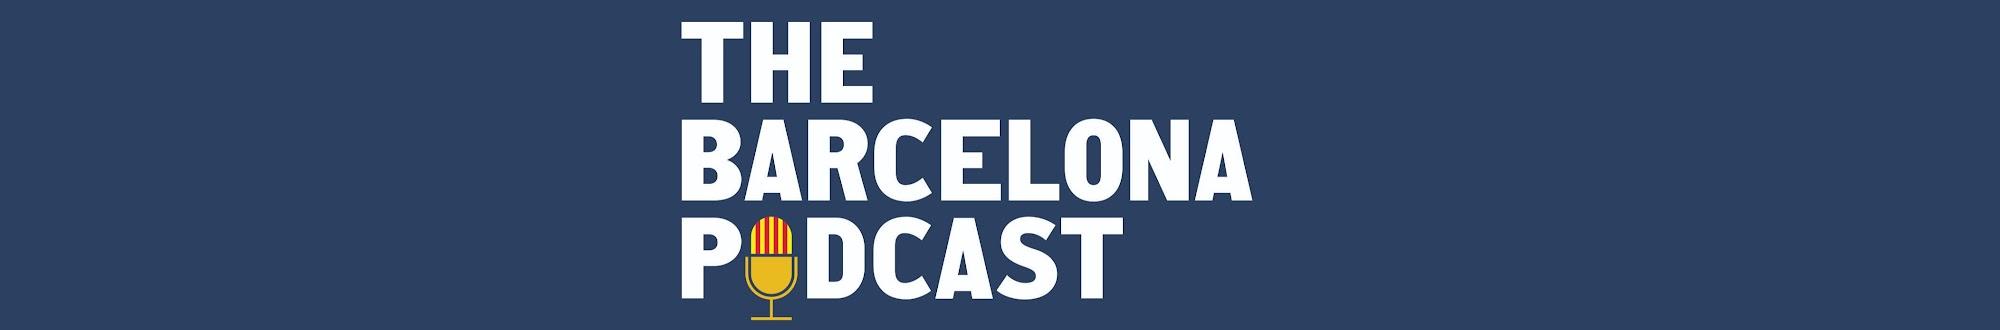 The Barcelona Podcast